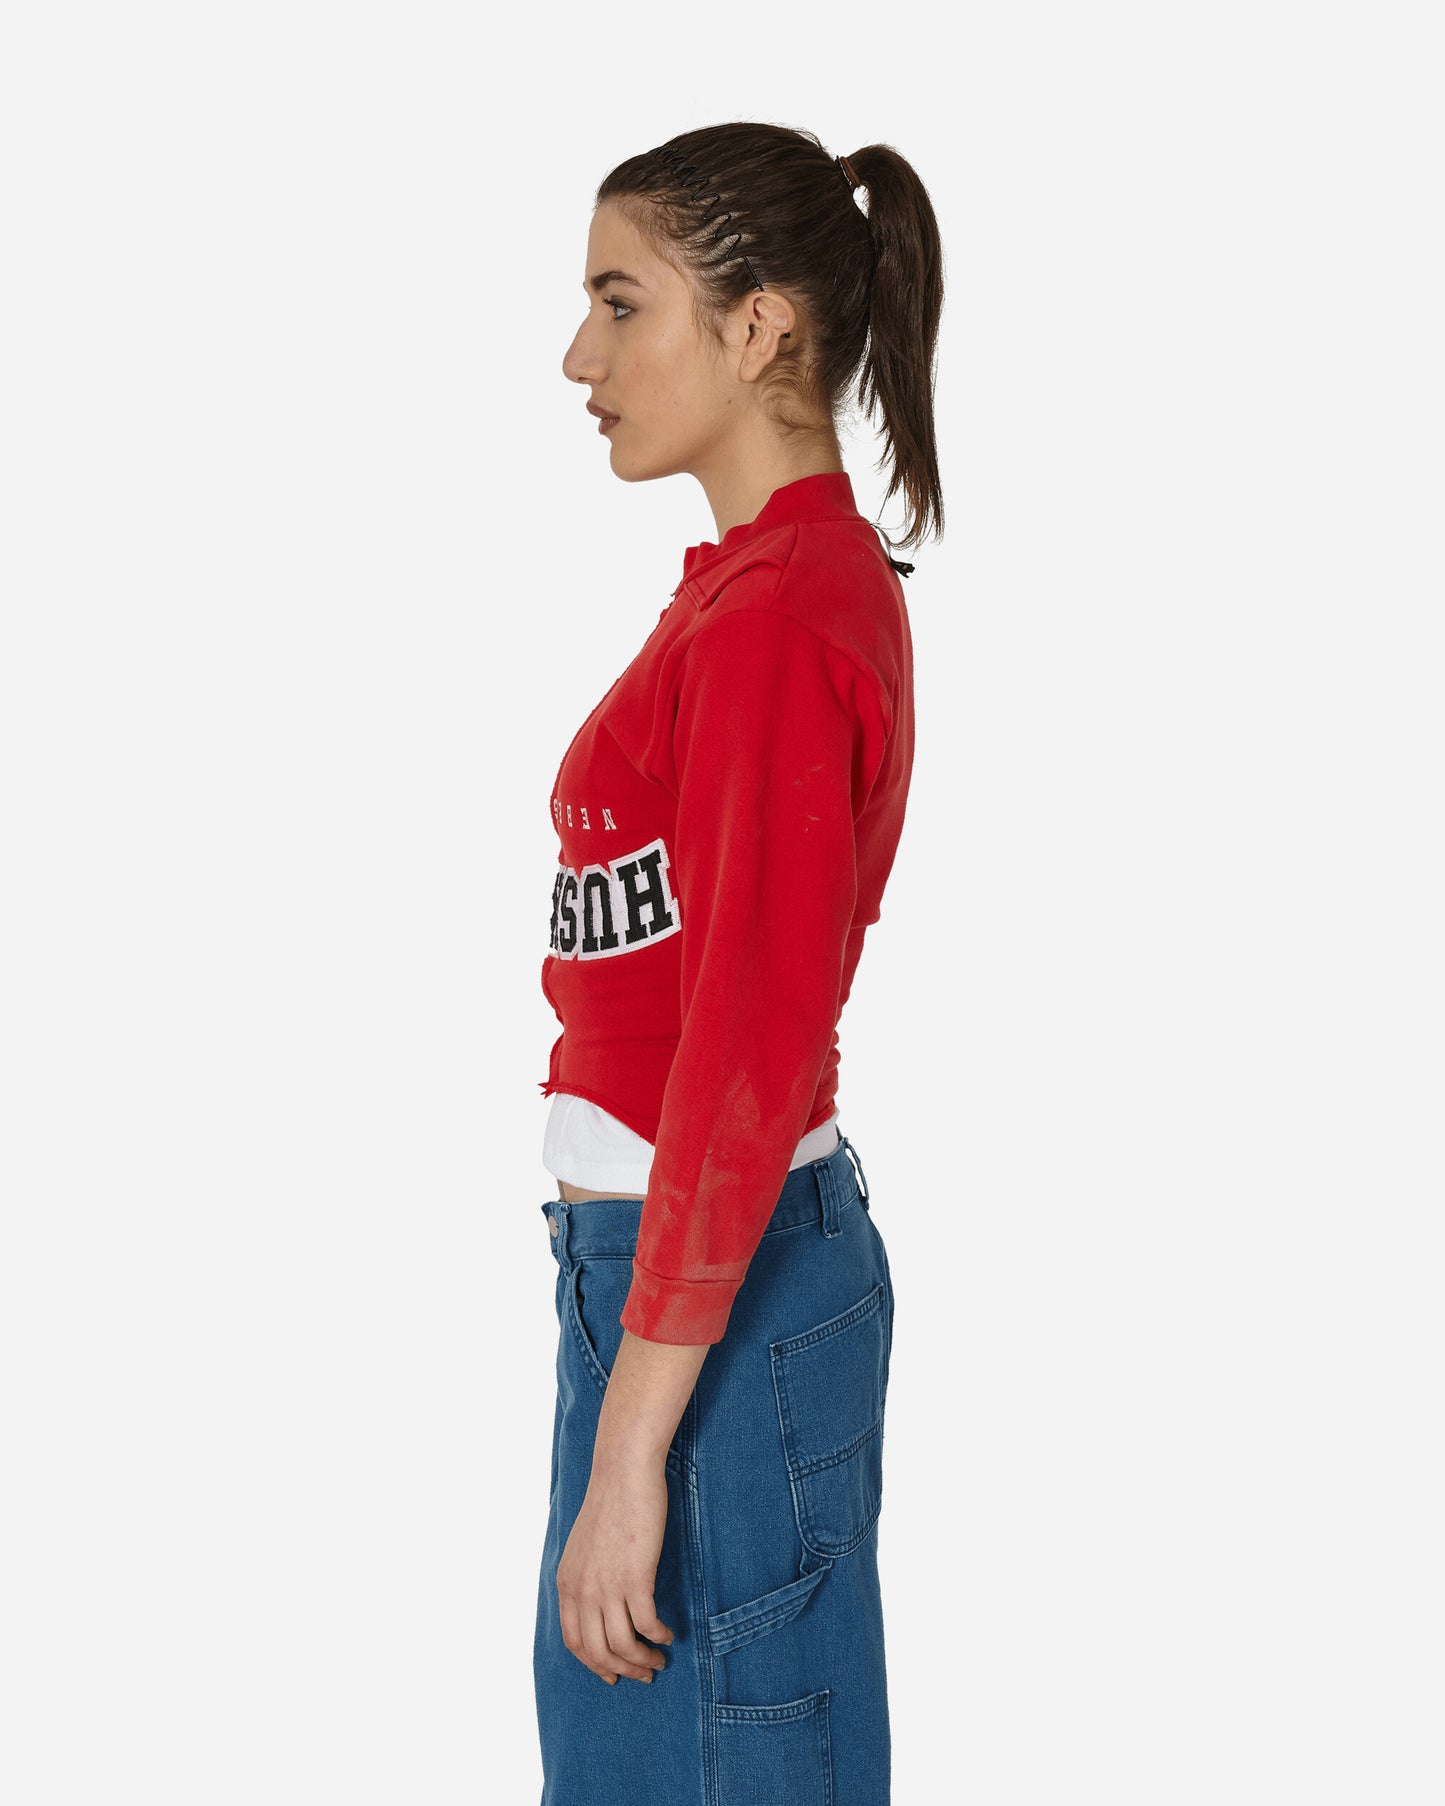 Prototypes Wmns Upside Down Zip Up Red/Print Sweatshirts Track Tops PT05JTO47WWW REDPRINT